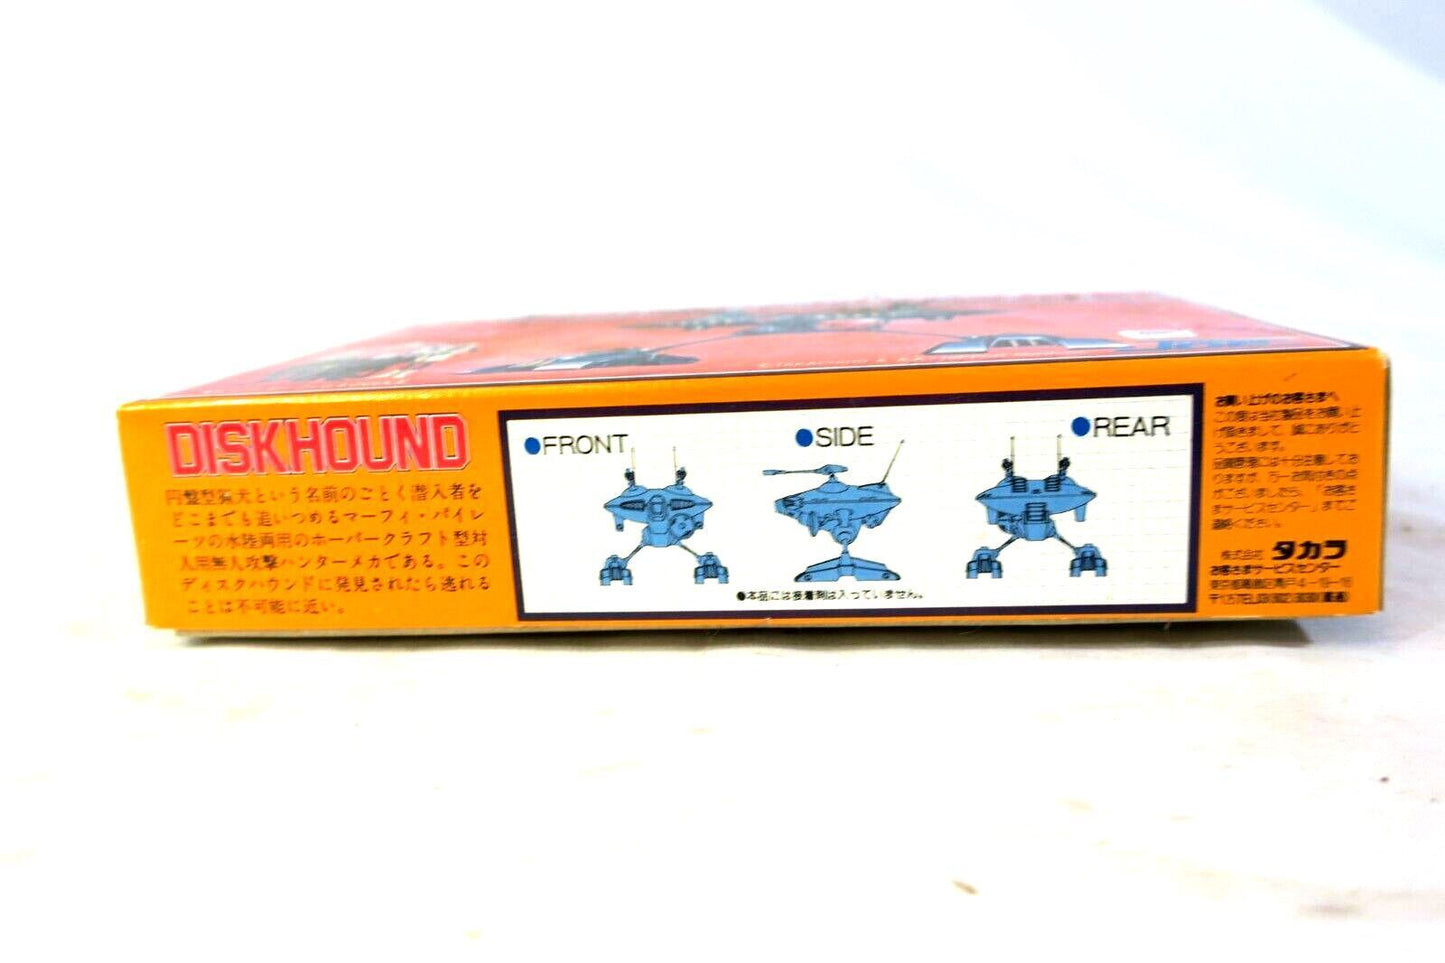 Takara Crusher Joe Diskhound Disk Hound Model Kit 443006-2 Anime A7